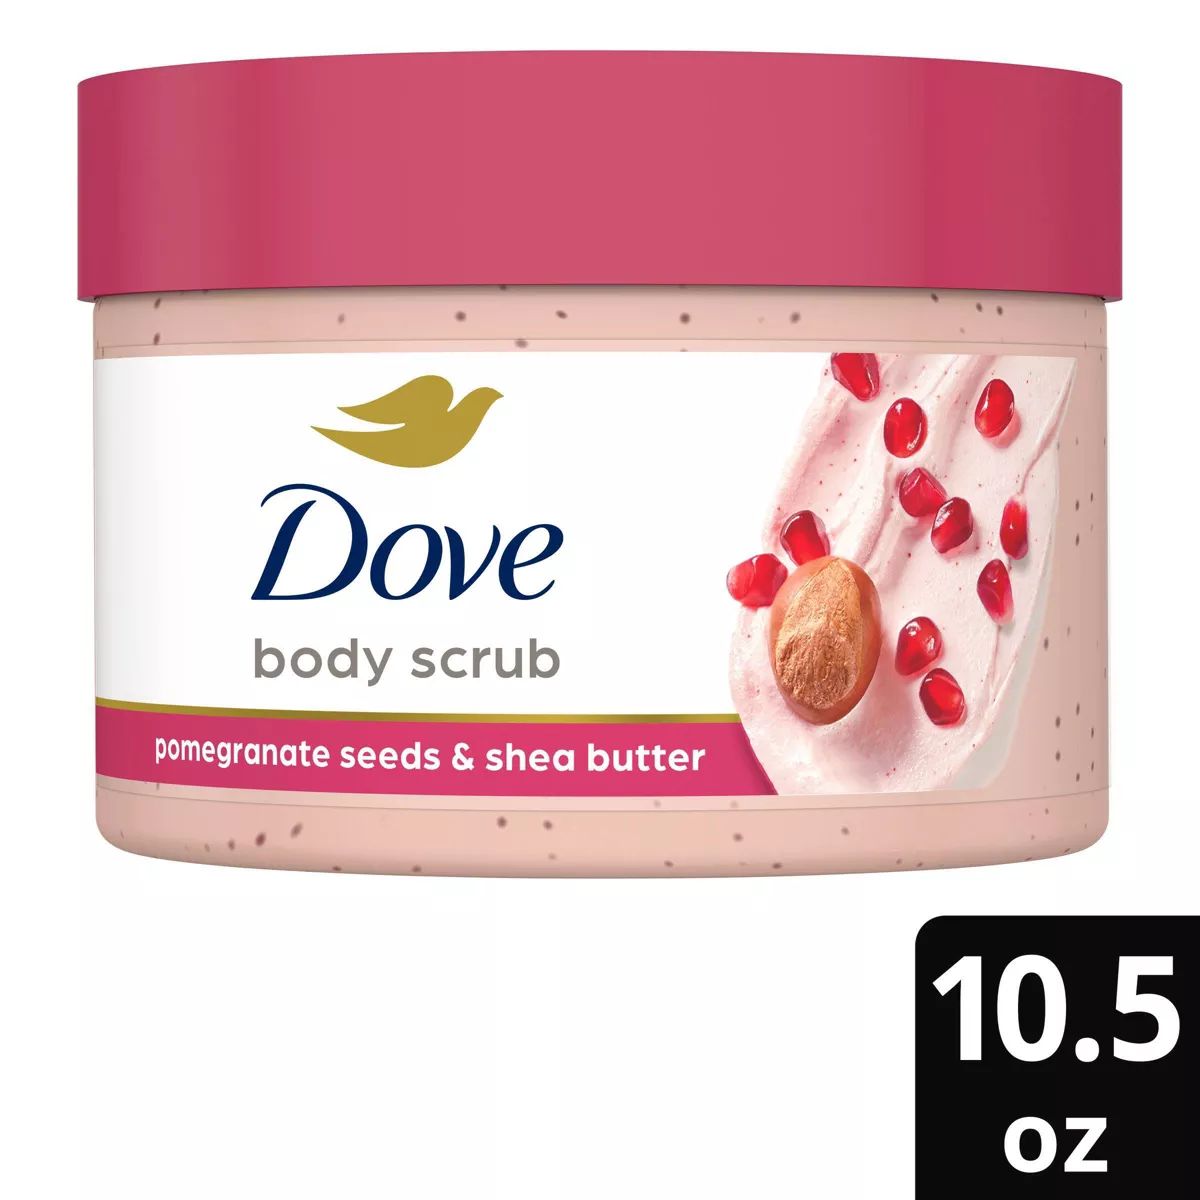 Dove Pomegranate Seeds & Shea Butter Exfoliating Body Scrub - 10.5 oz | Target